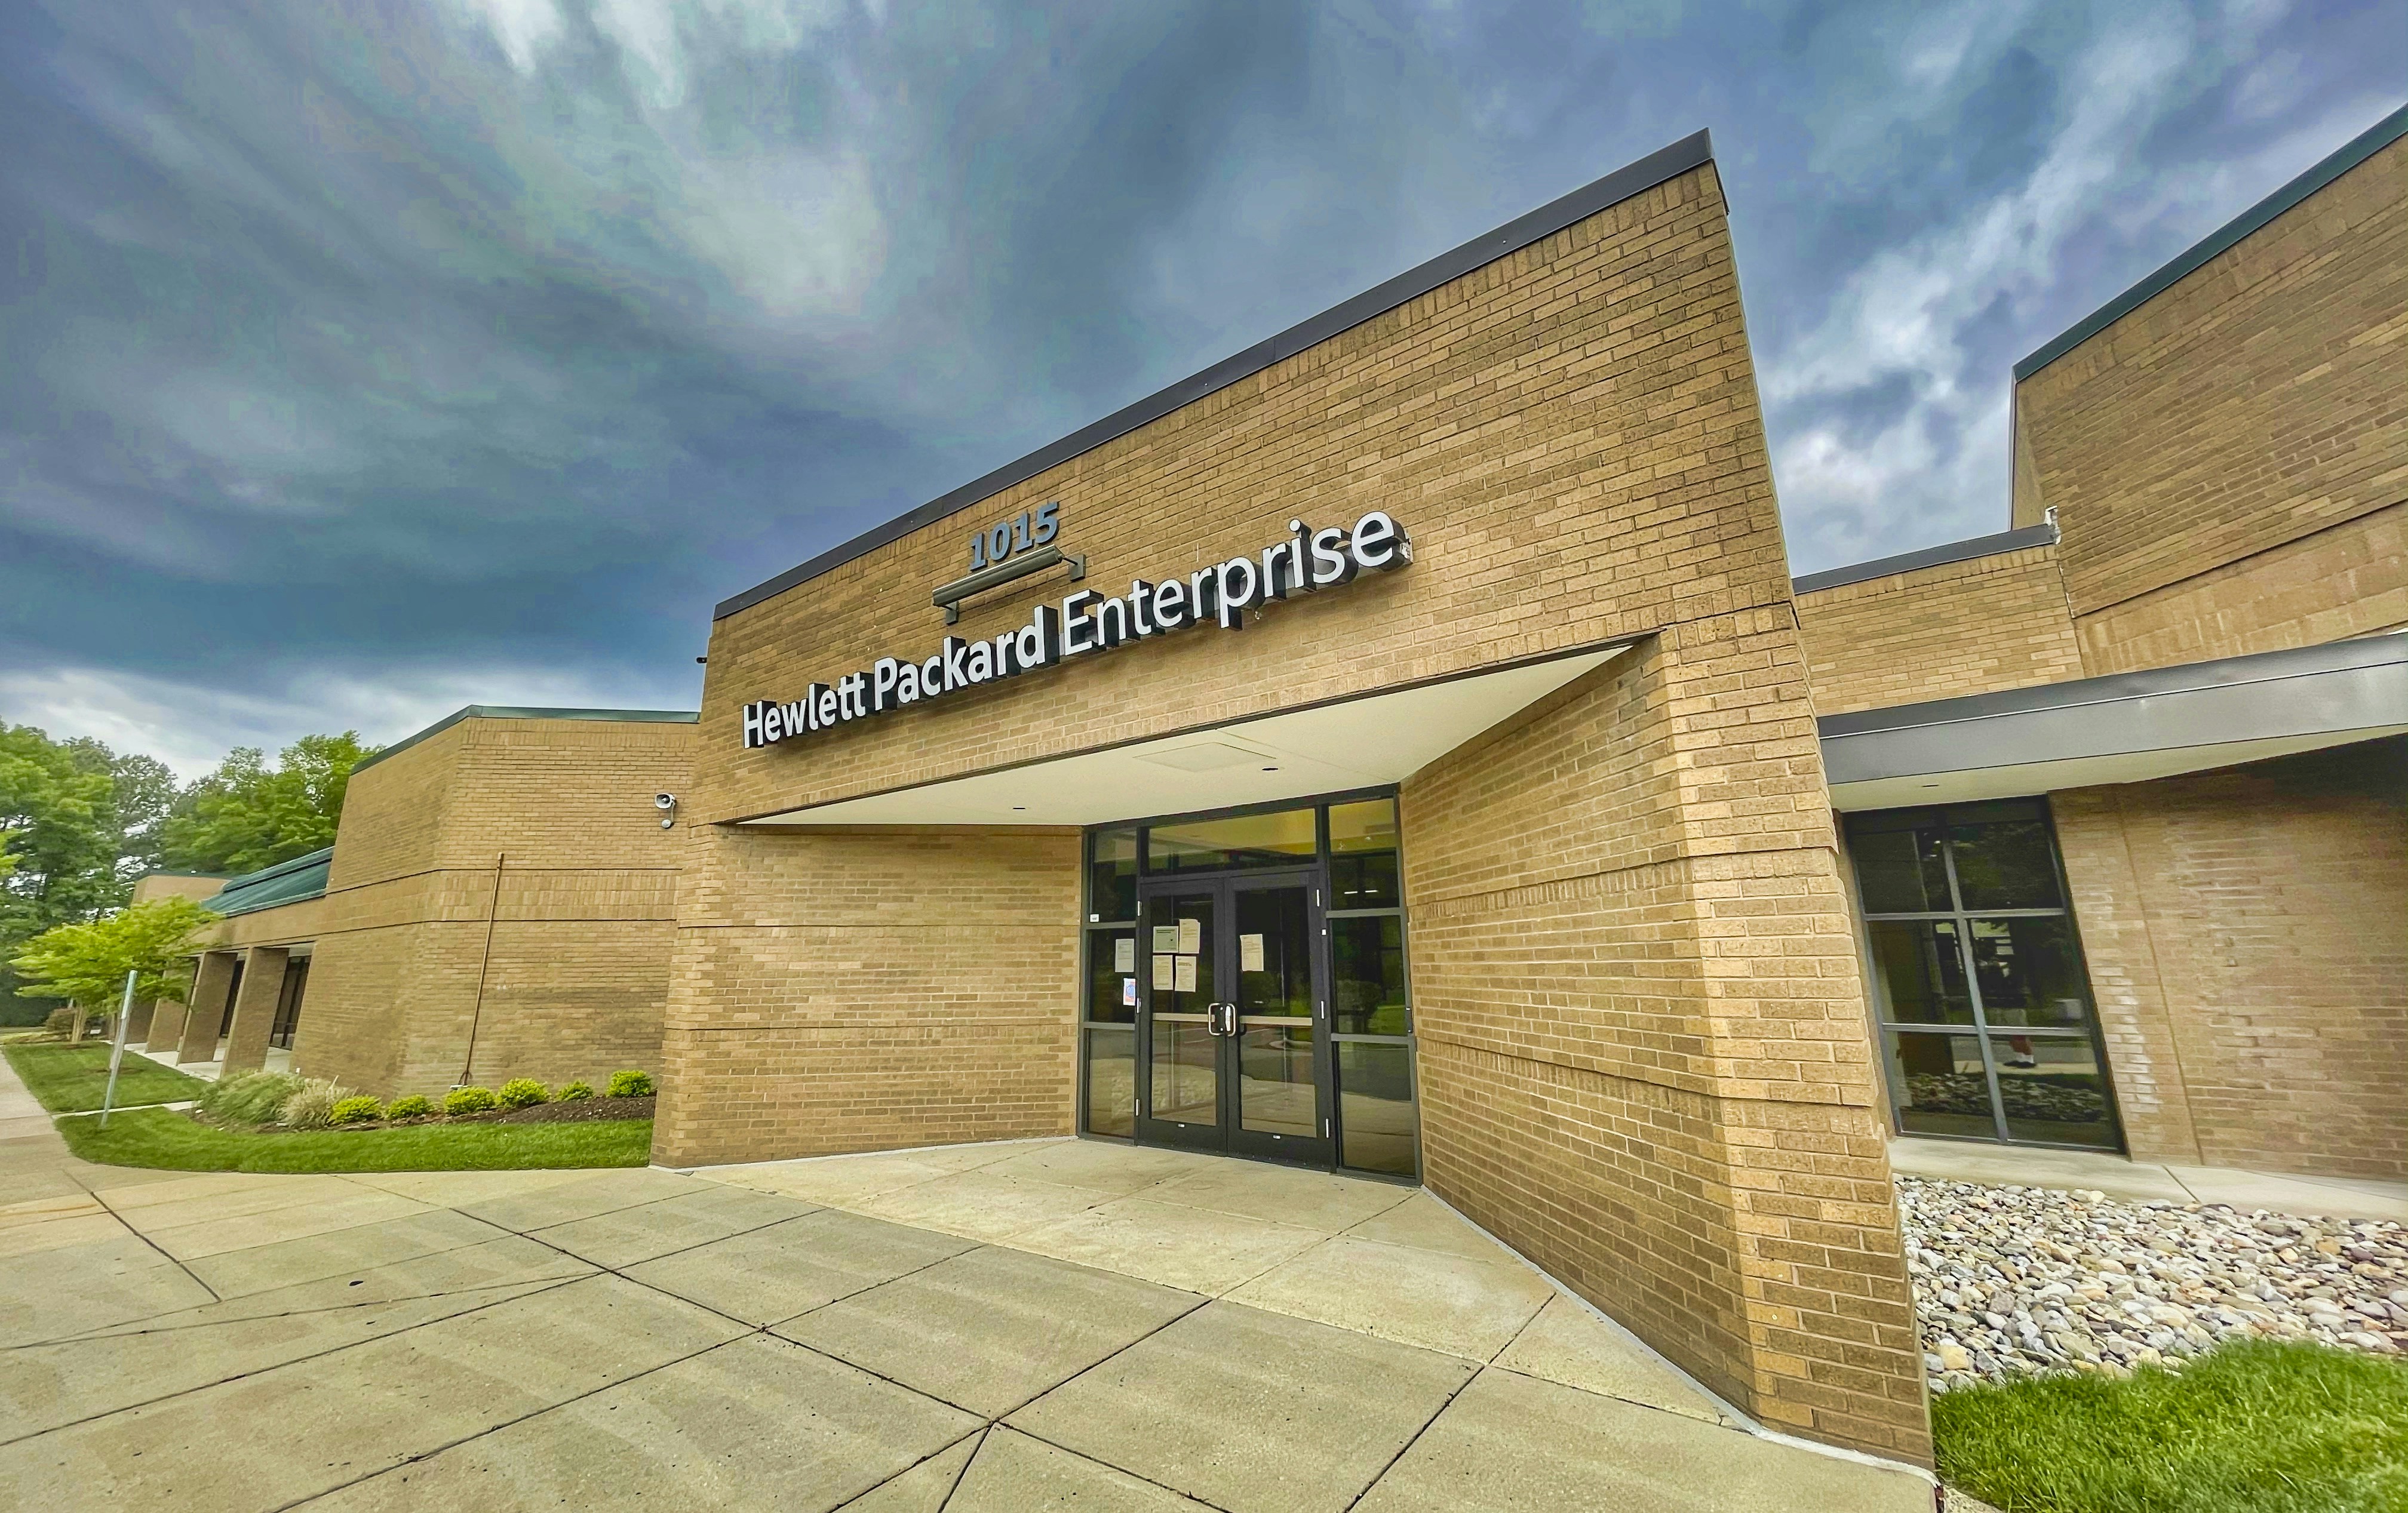 Hewlett Packard Enterprise office building in Research Triangle Park, North Carolina.